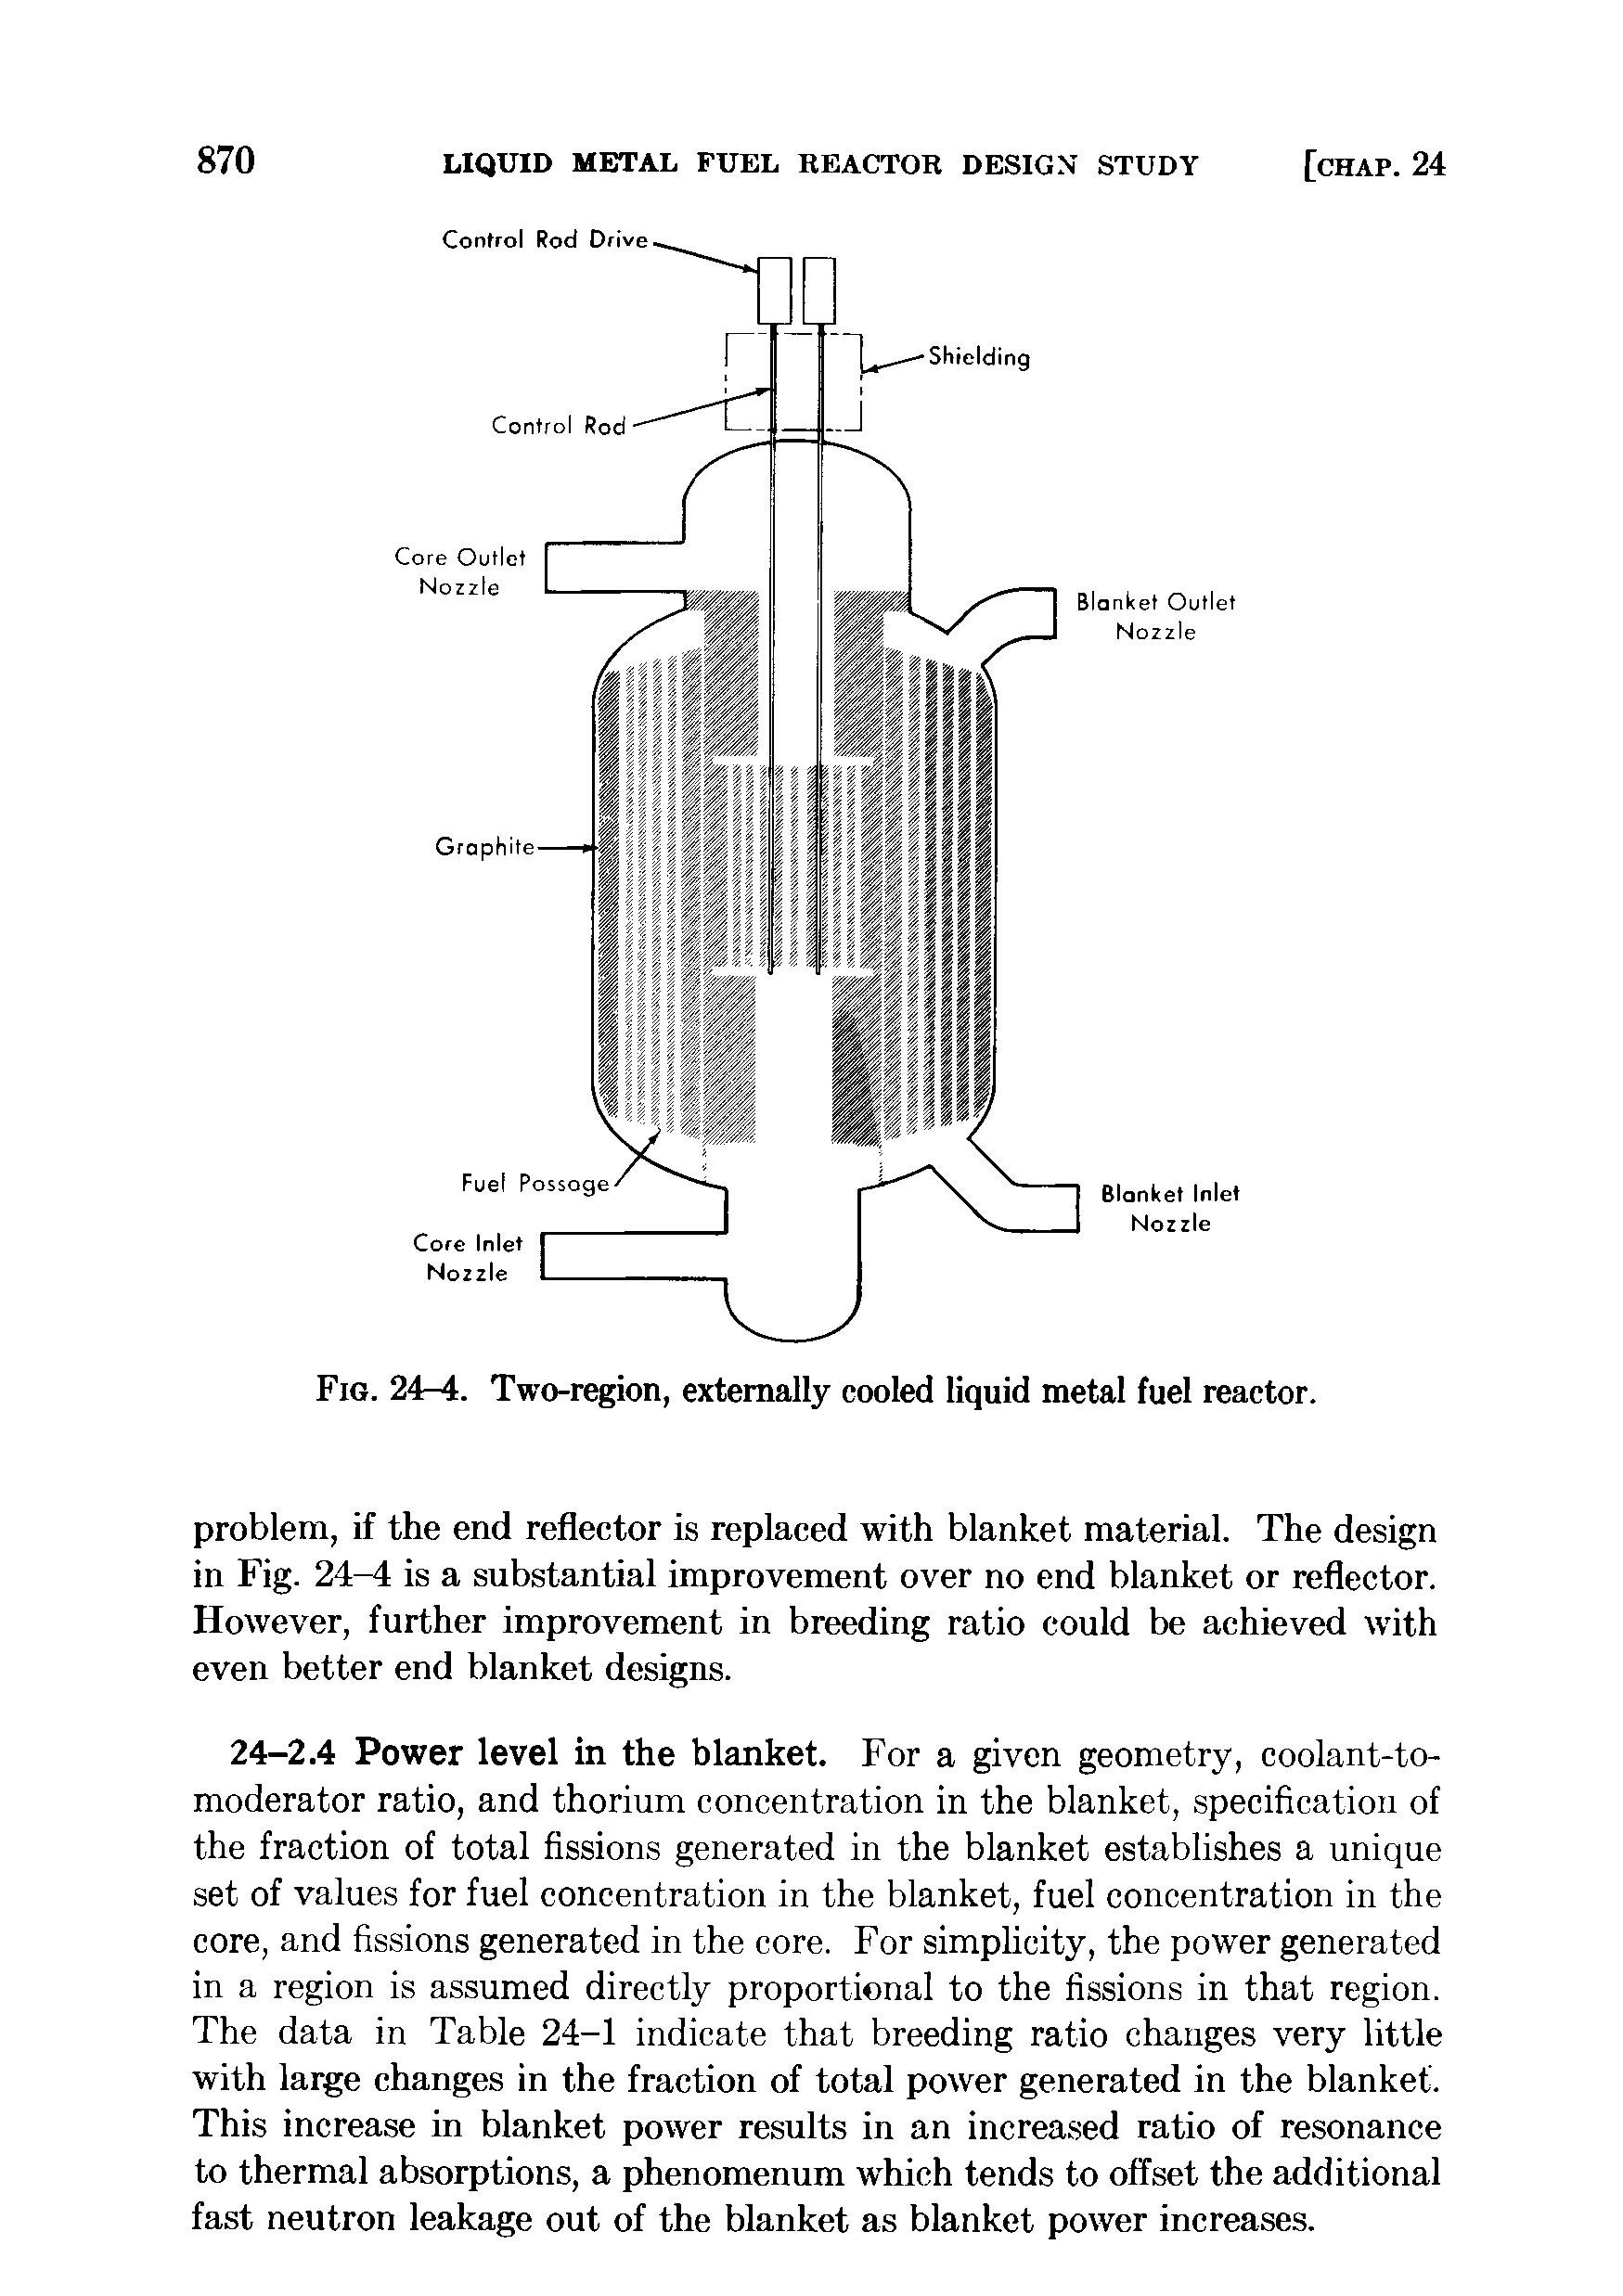 Fig. 24-4. Two-region, externally cooled liquid metal fuel reactor.